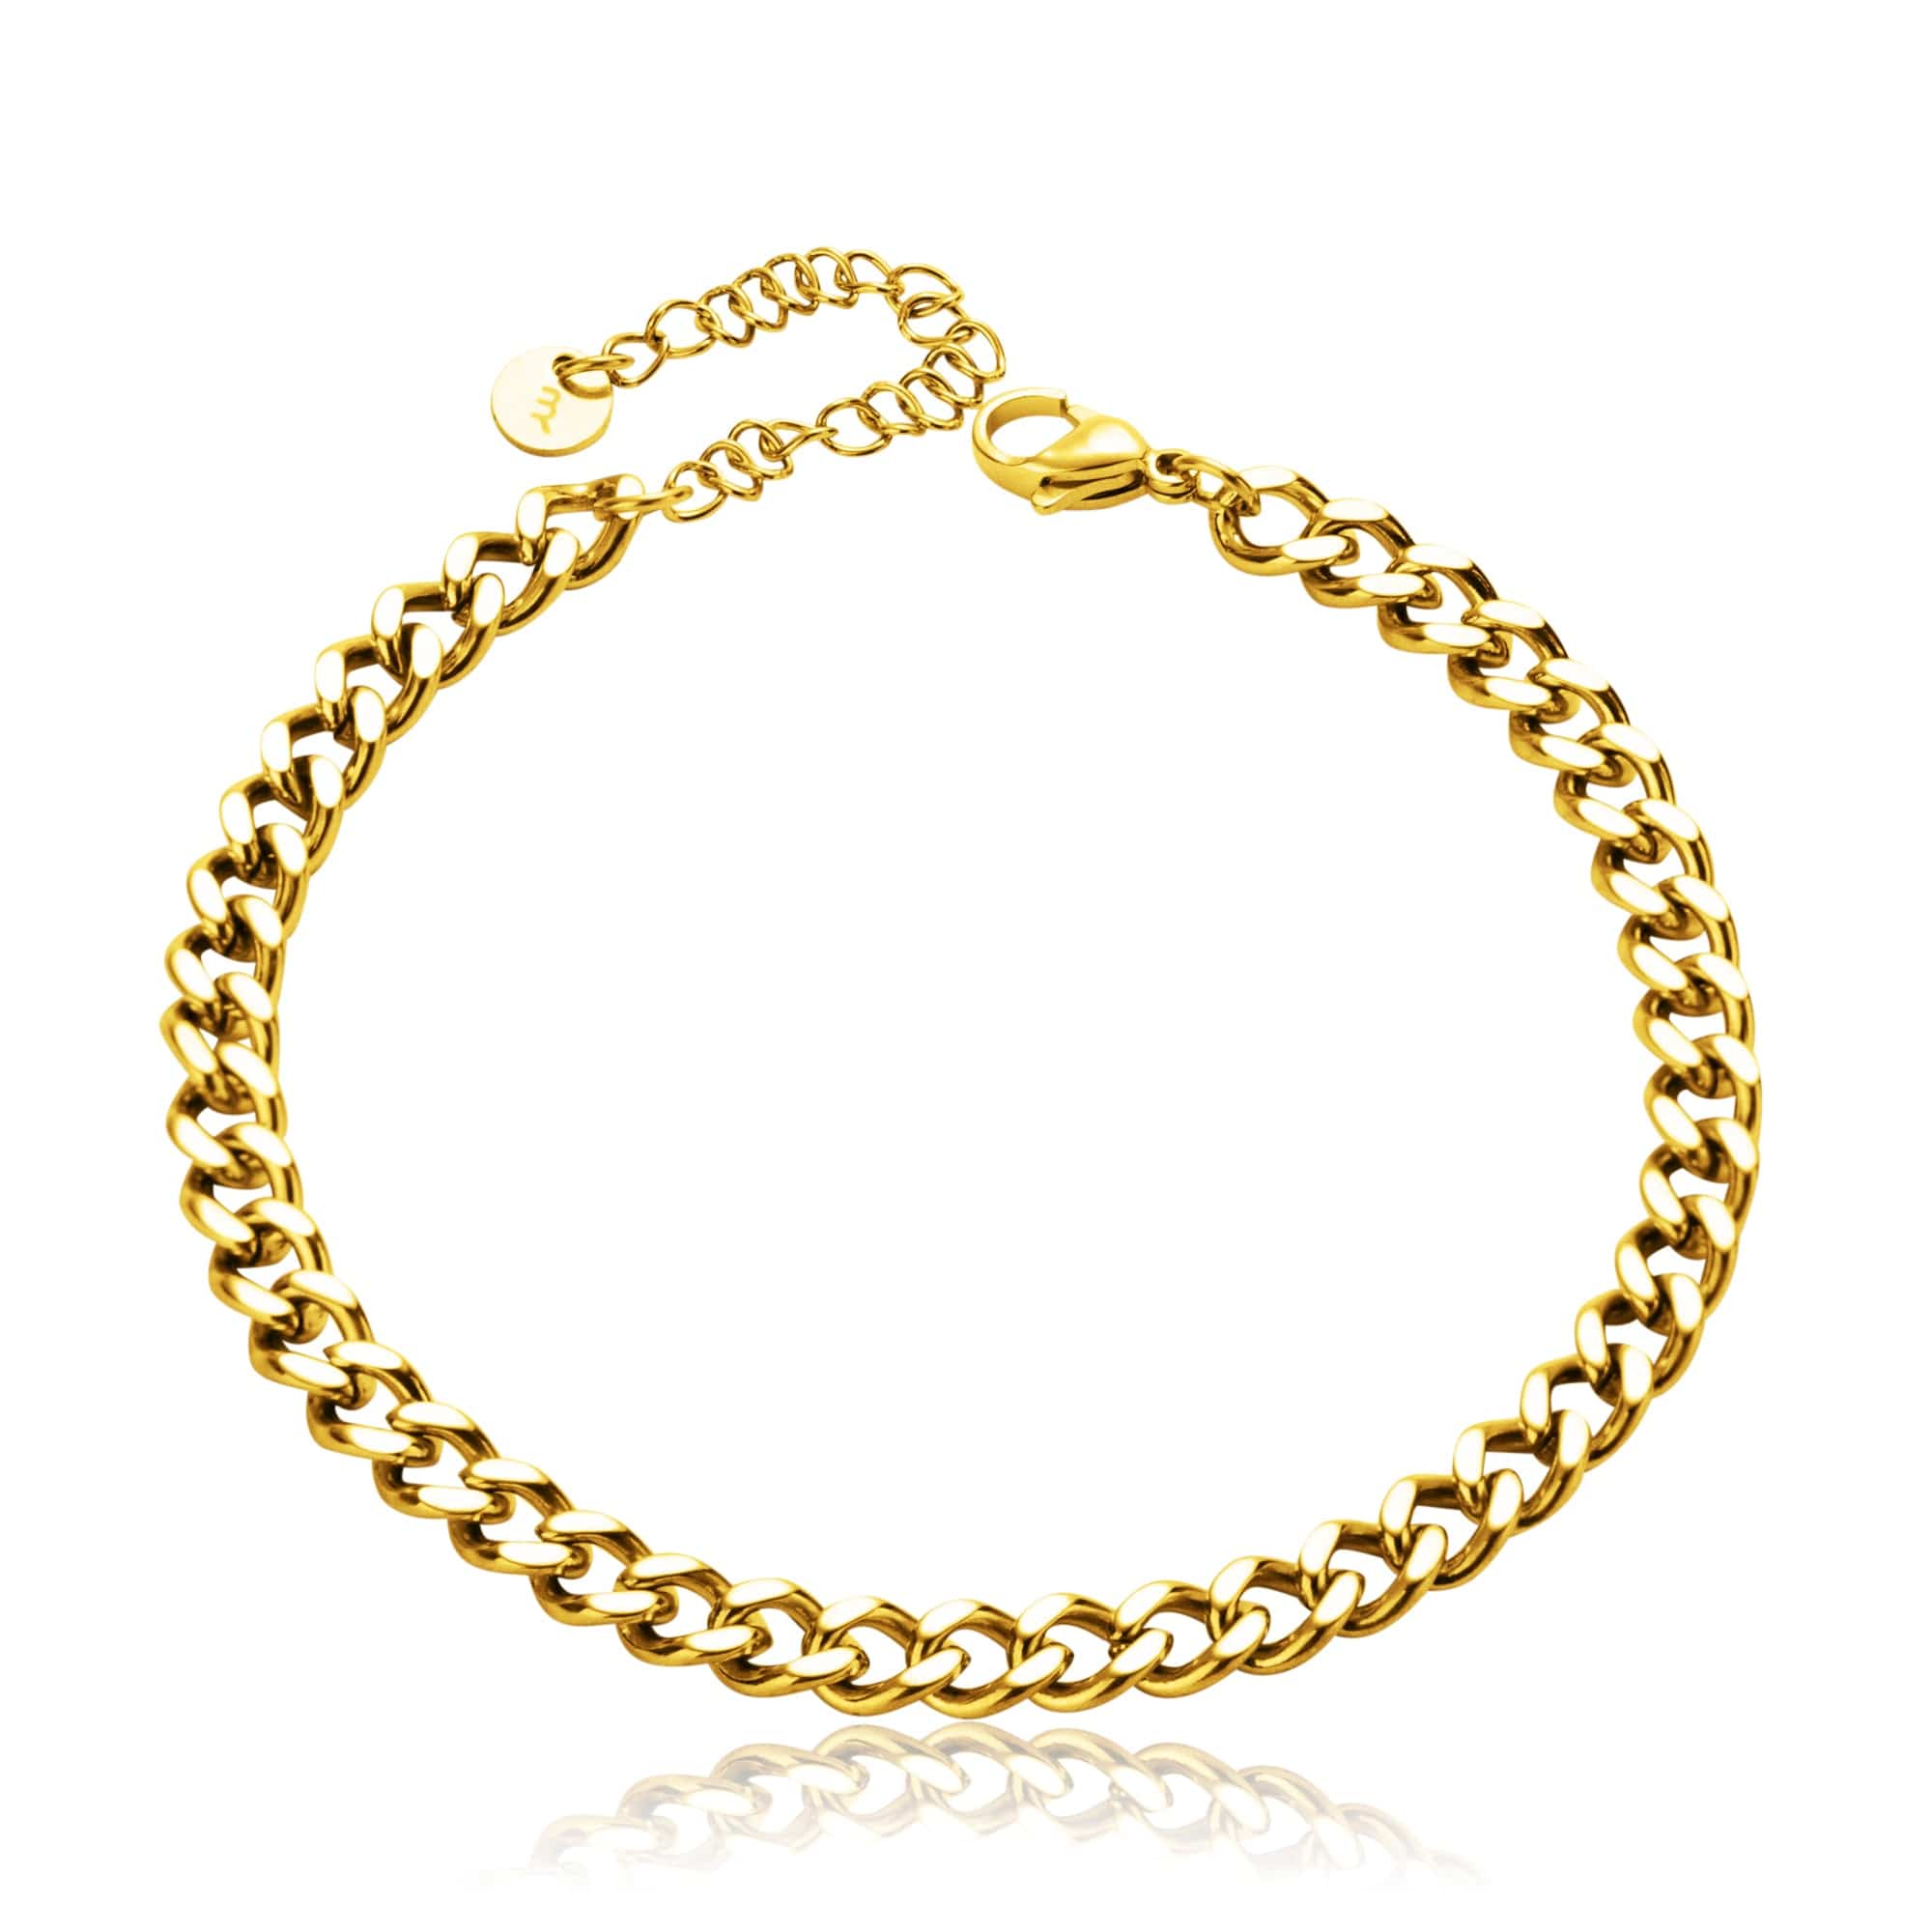 bianco rosso Bracelet Gold Chain Bracelet cyprus greece jewelry gift free shipping europe worldwide